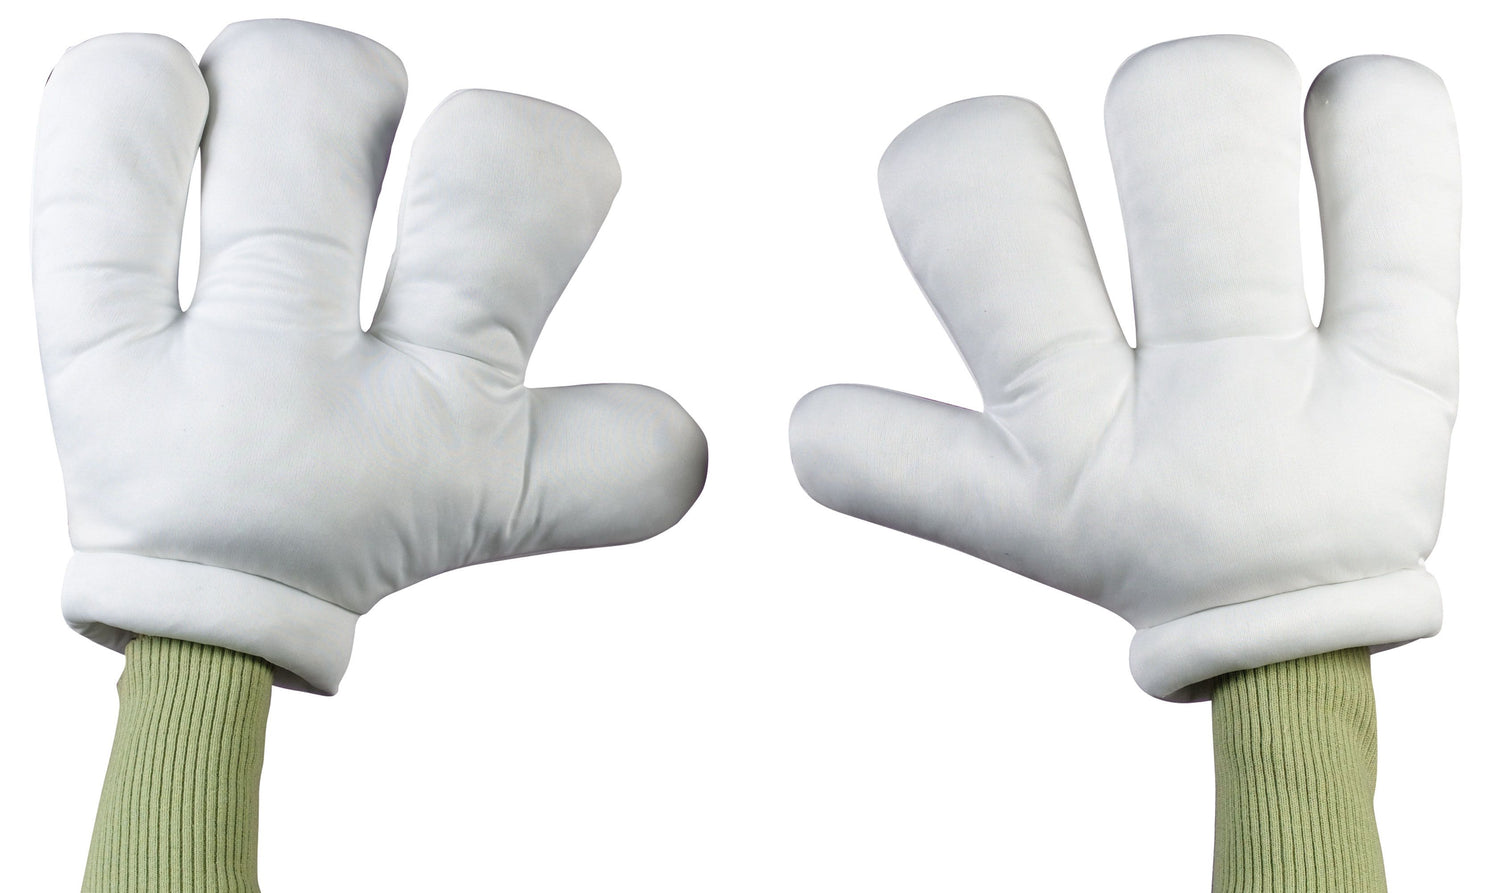 Oversize Cartoon Hands Adult Gloves Costume Accessory Oversized cartoon-style gloves